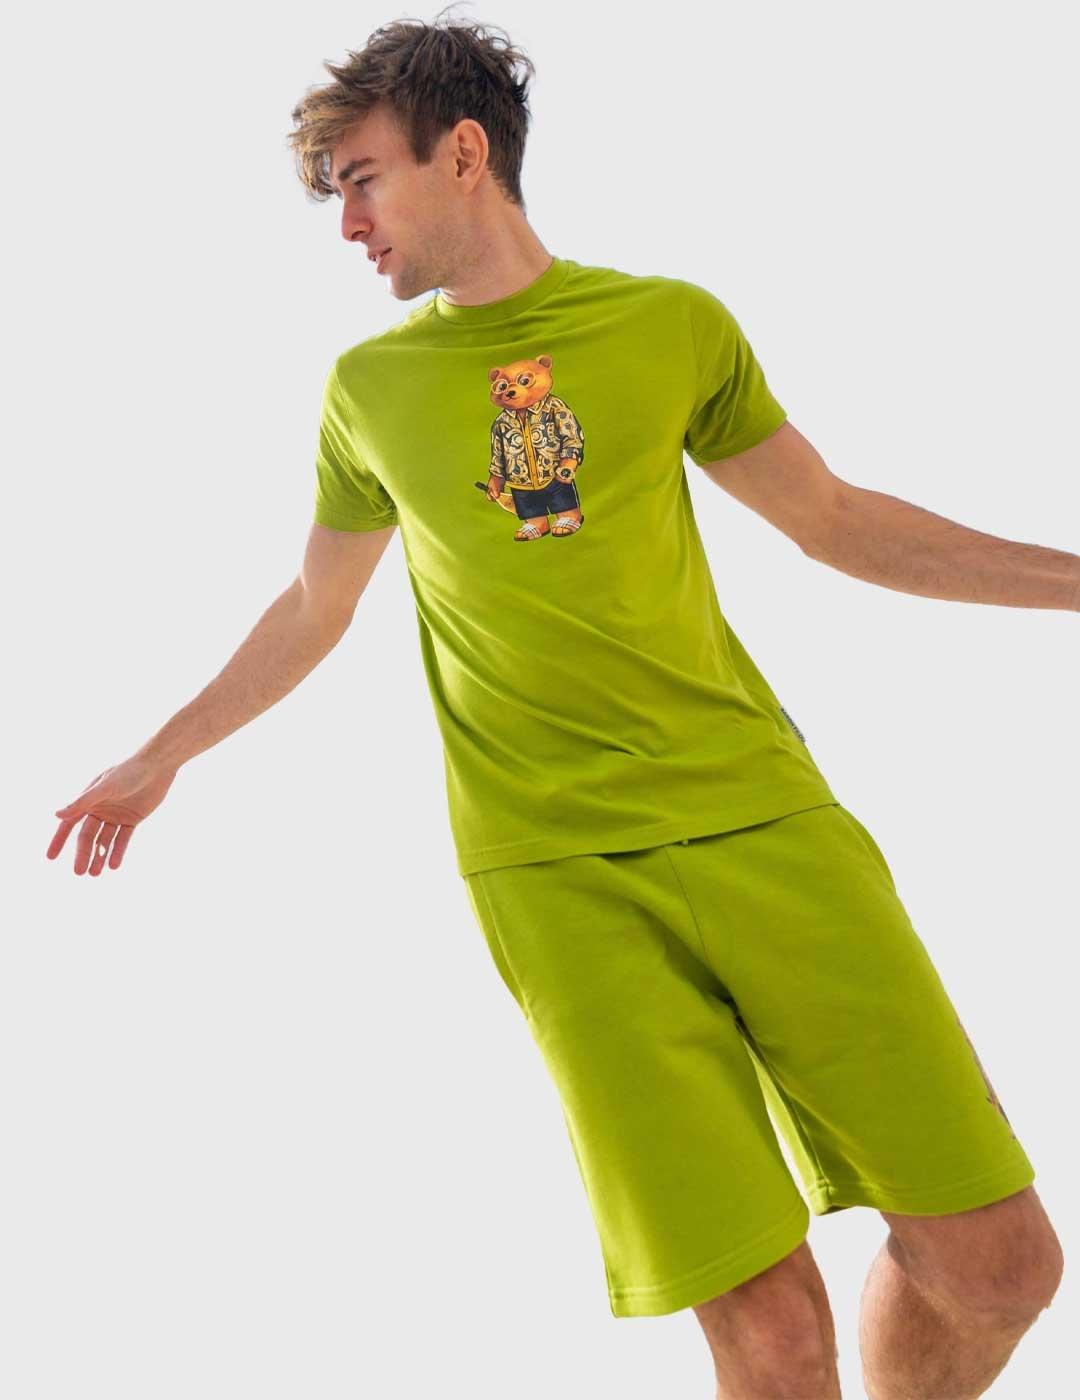 Baron Filou T- Shirt Filou LXXXI Camiseta verde de hombre